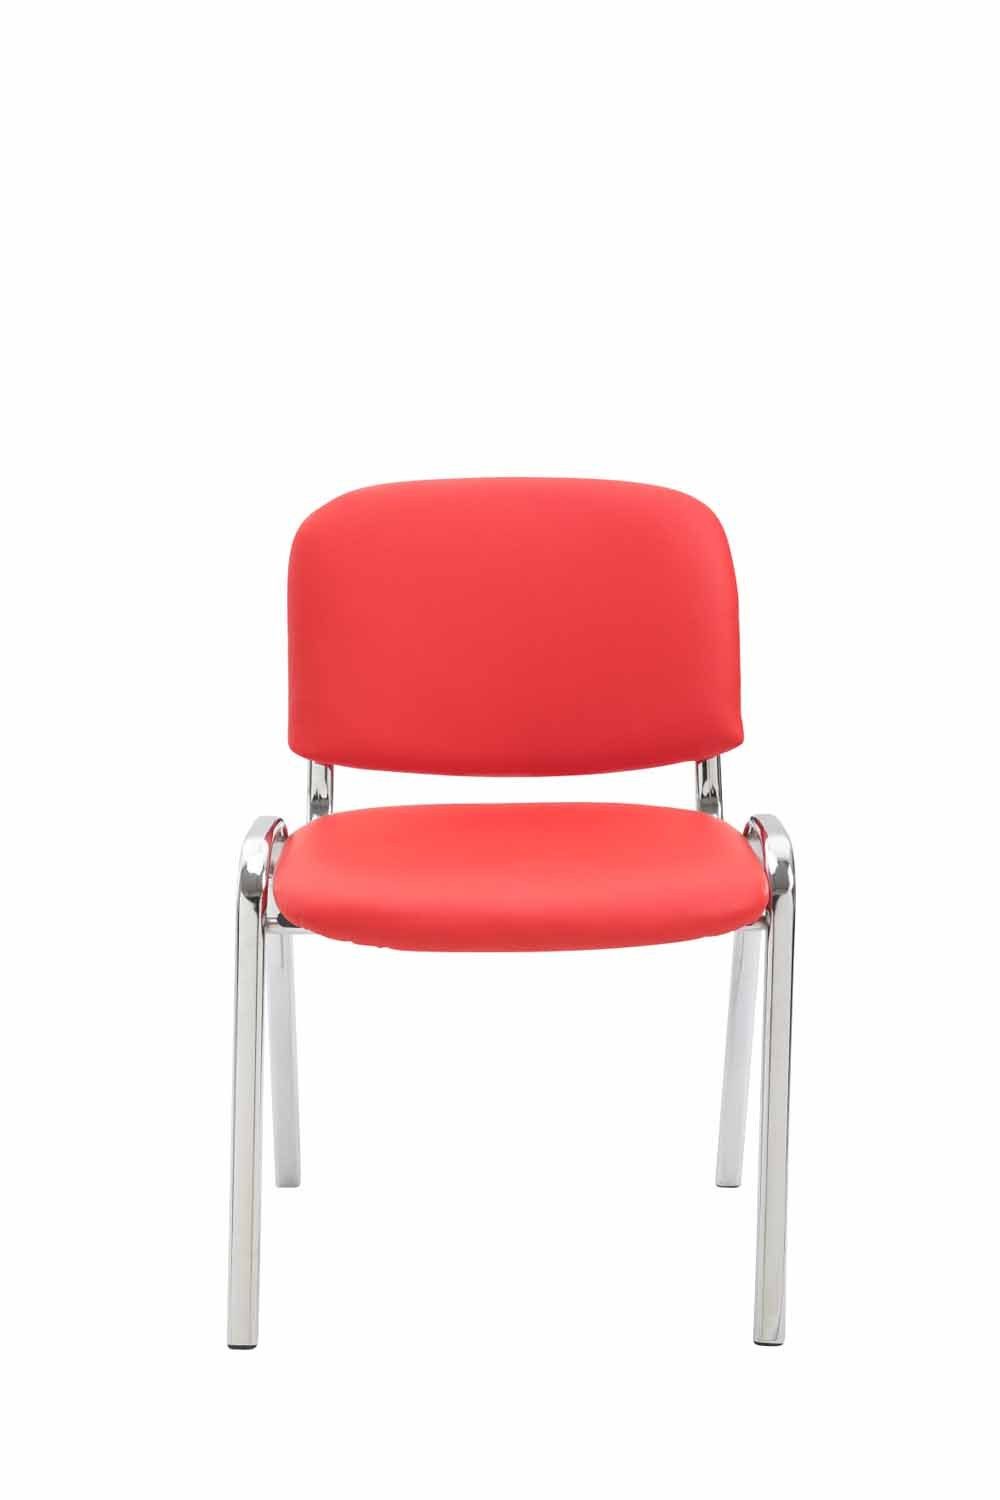 Gestell: chrom TPFLiving (Besprechungsstuhl Warteraumstuhl mit Sitzfläche: - Keen Metall Konferenzstuhl Polsterung Messestuhl), Besucherstuhl - Kunstleder - rot hochwertiger -